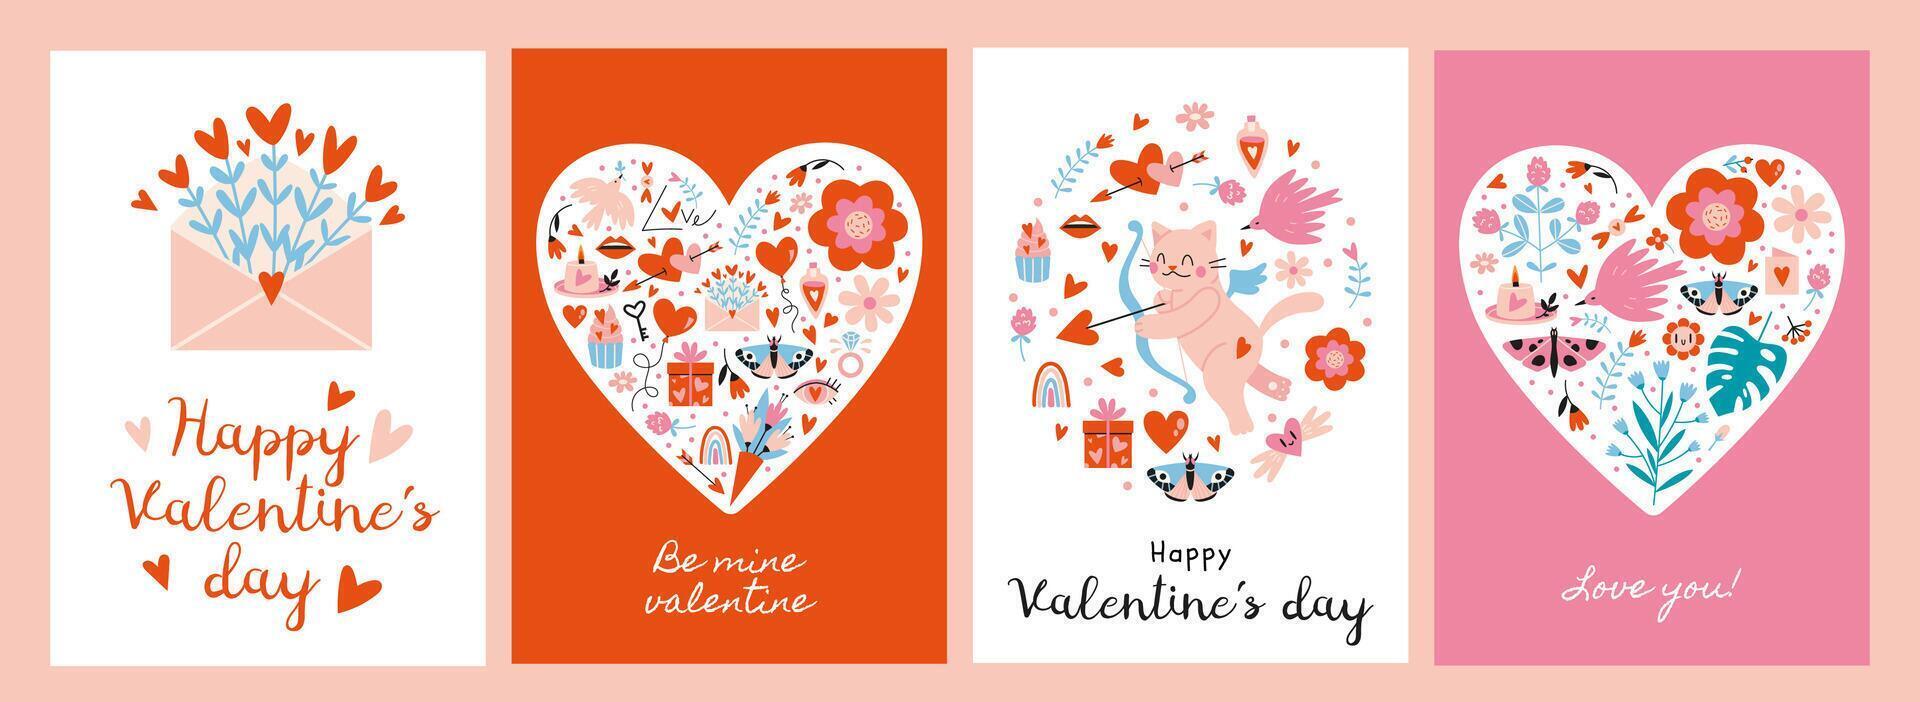 valentines cards set vector